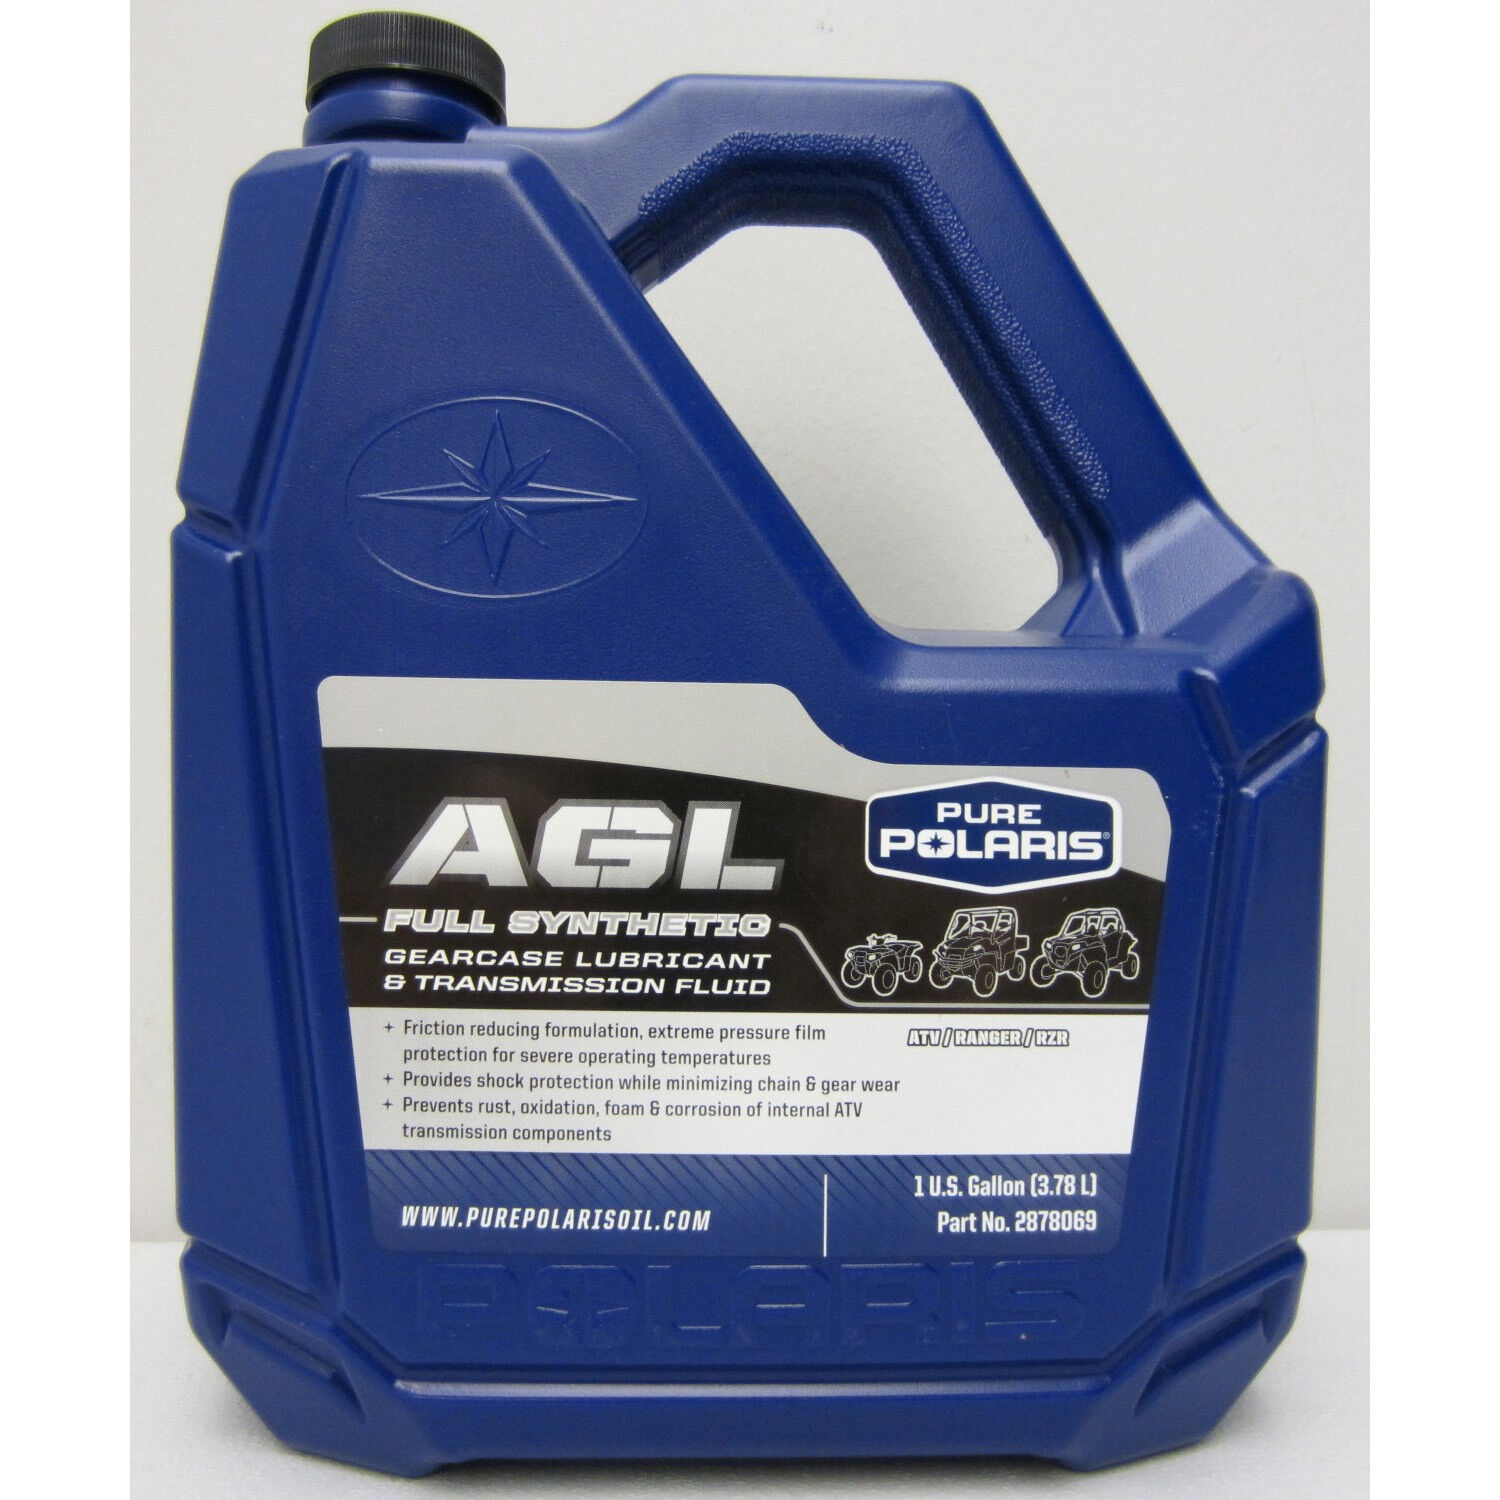 Polaris AGL Plus Synthetic Gearcase Oil Lube Lubricant/Transmission Fluid Gallon